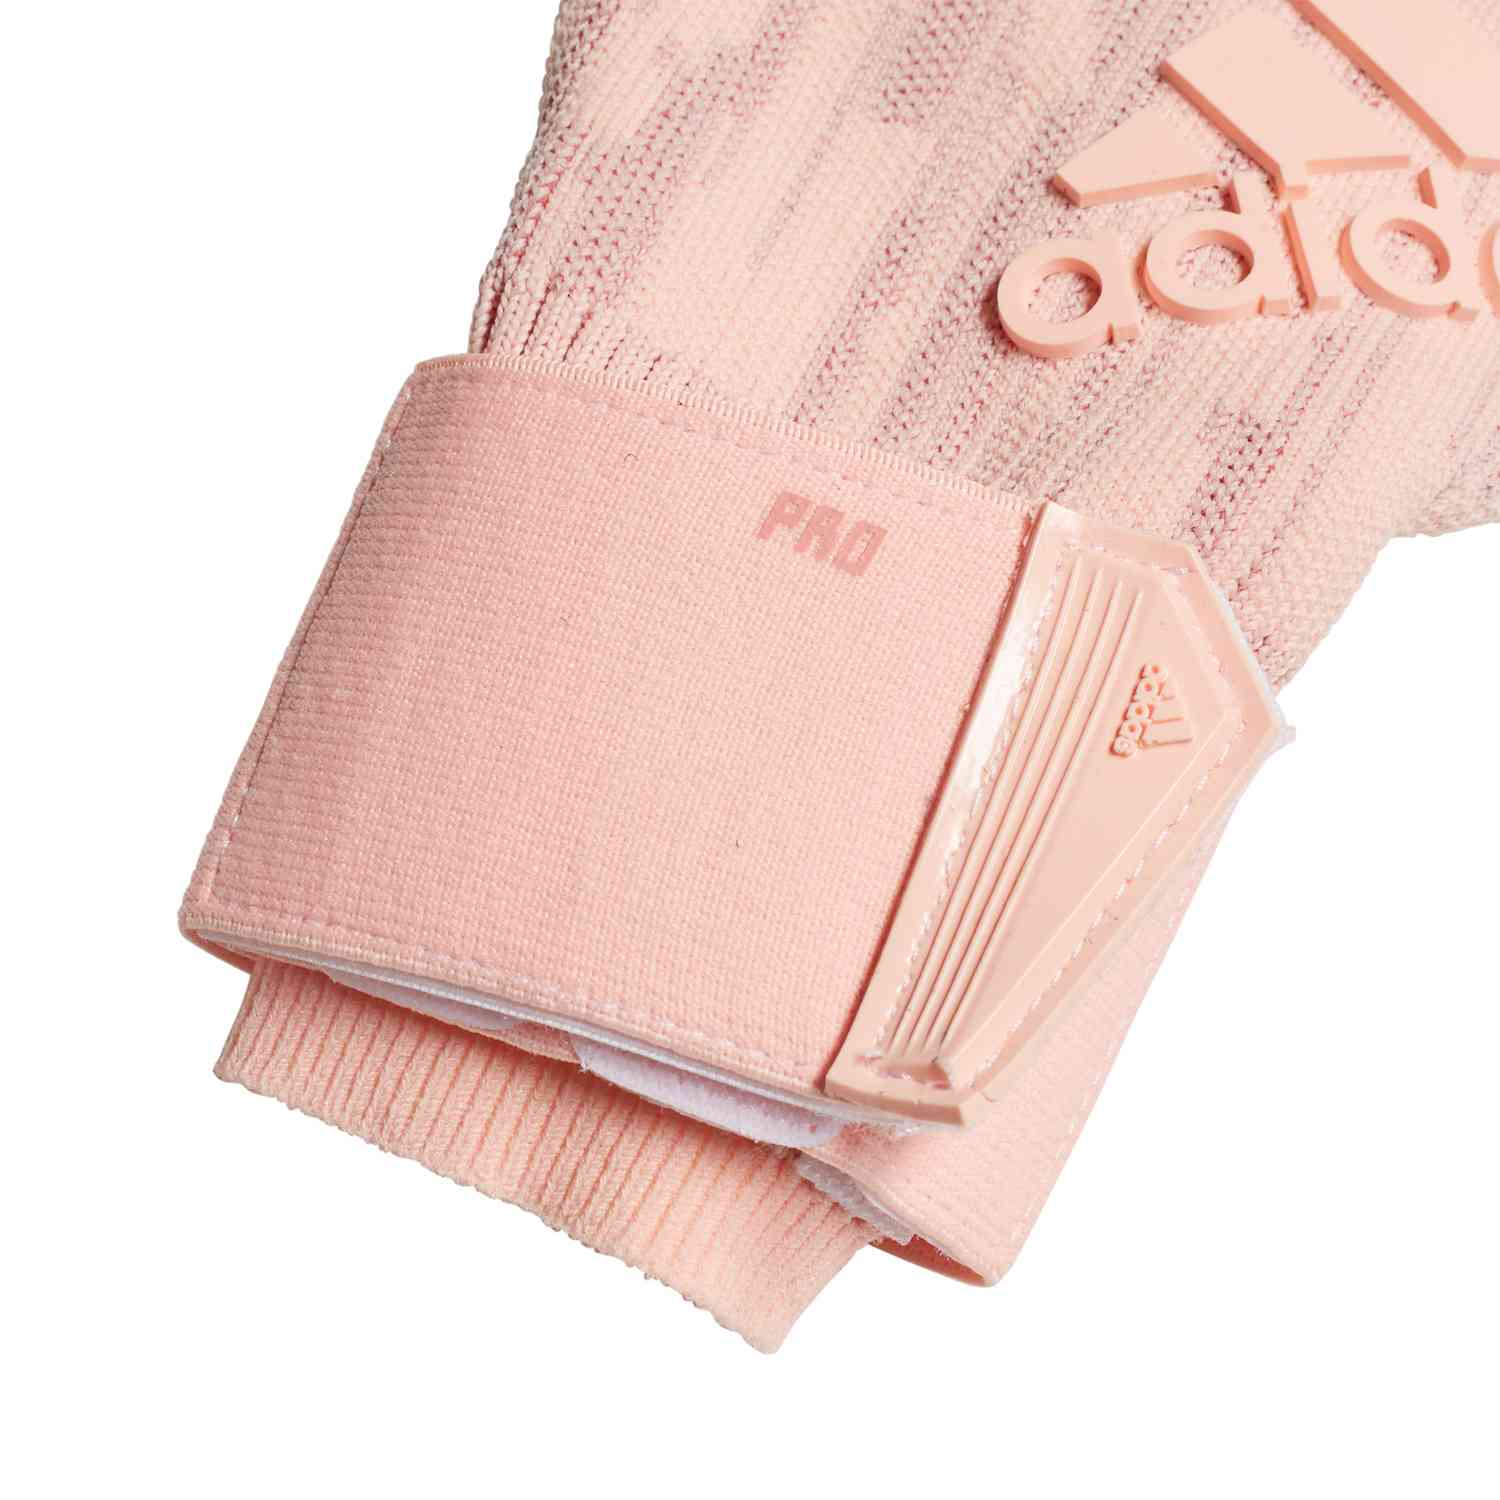 adidas goalkeeper gloves pink